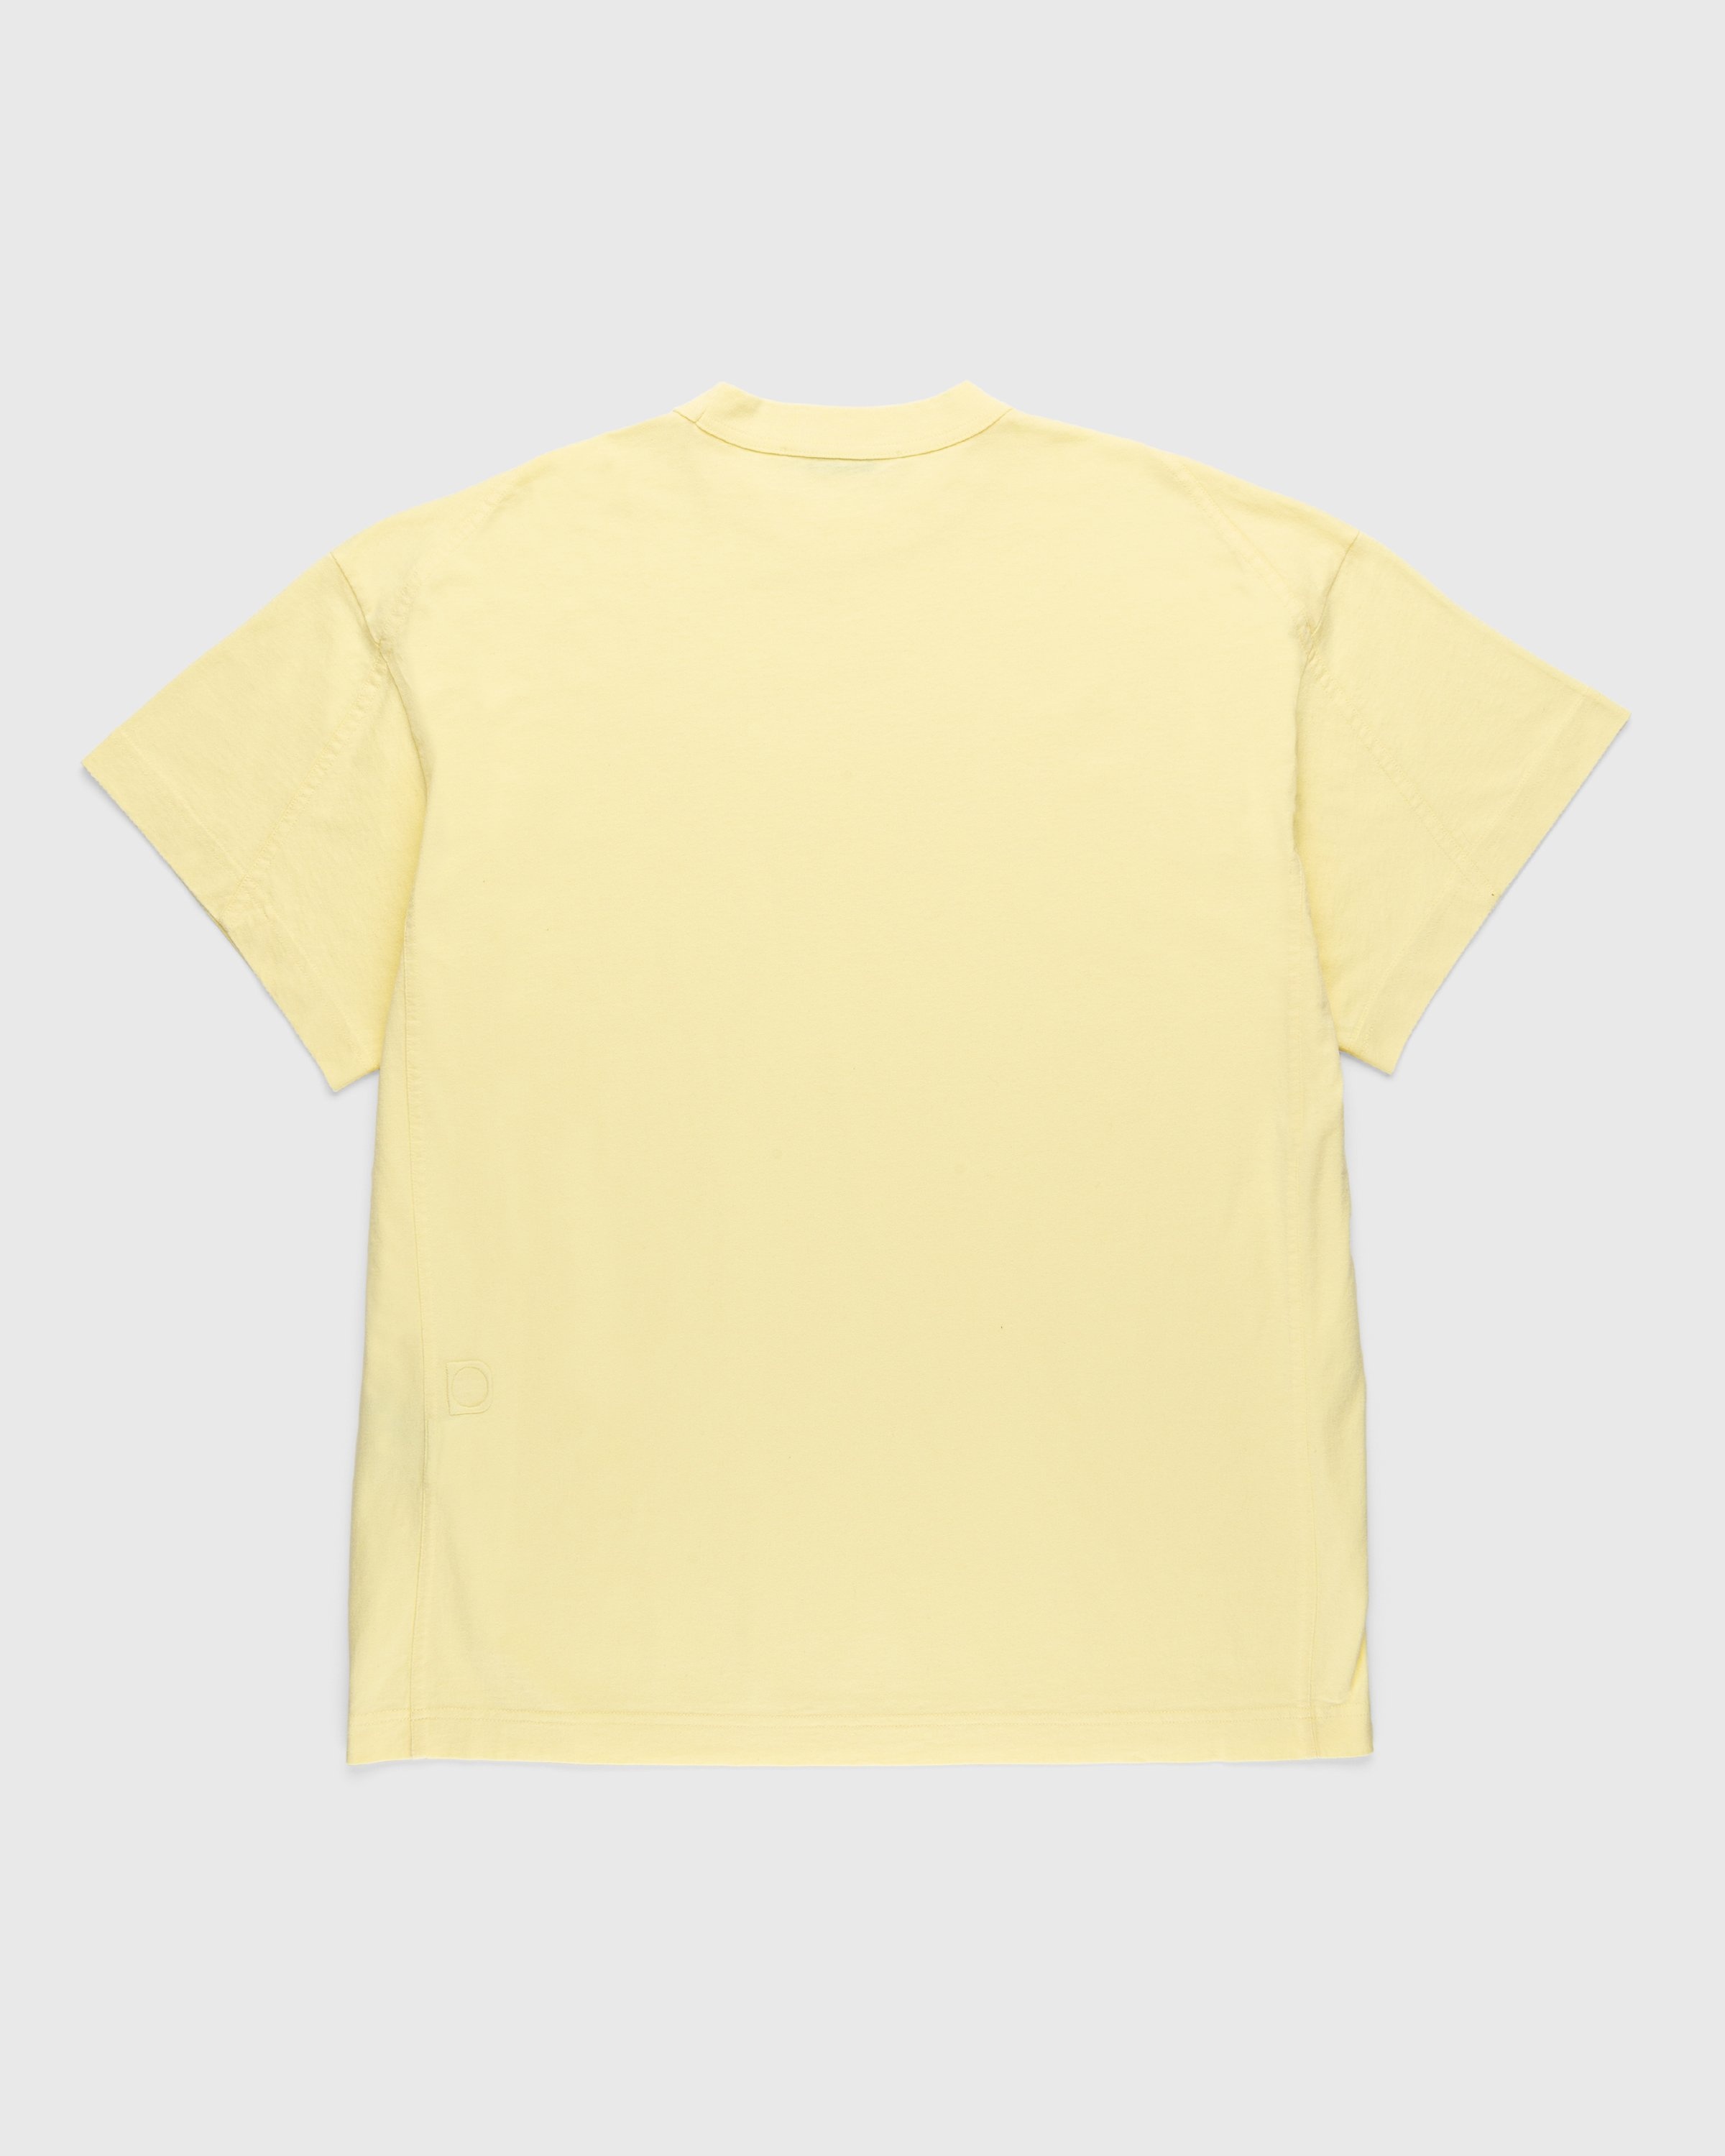 Diomene by Damir Doma – Cotton Crewneck T-Shirt Lemonade - Tops - Yellow - Image 2